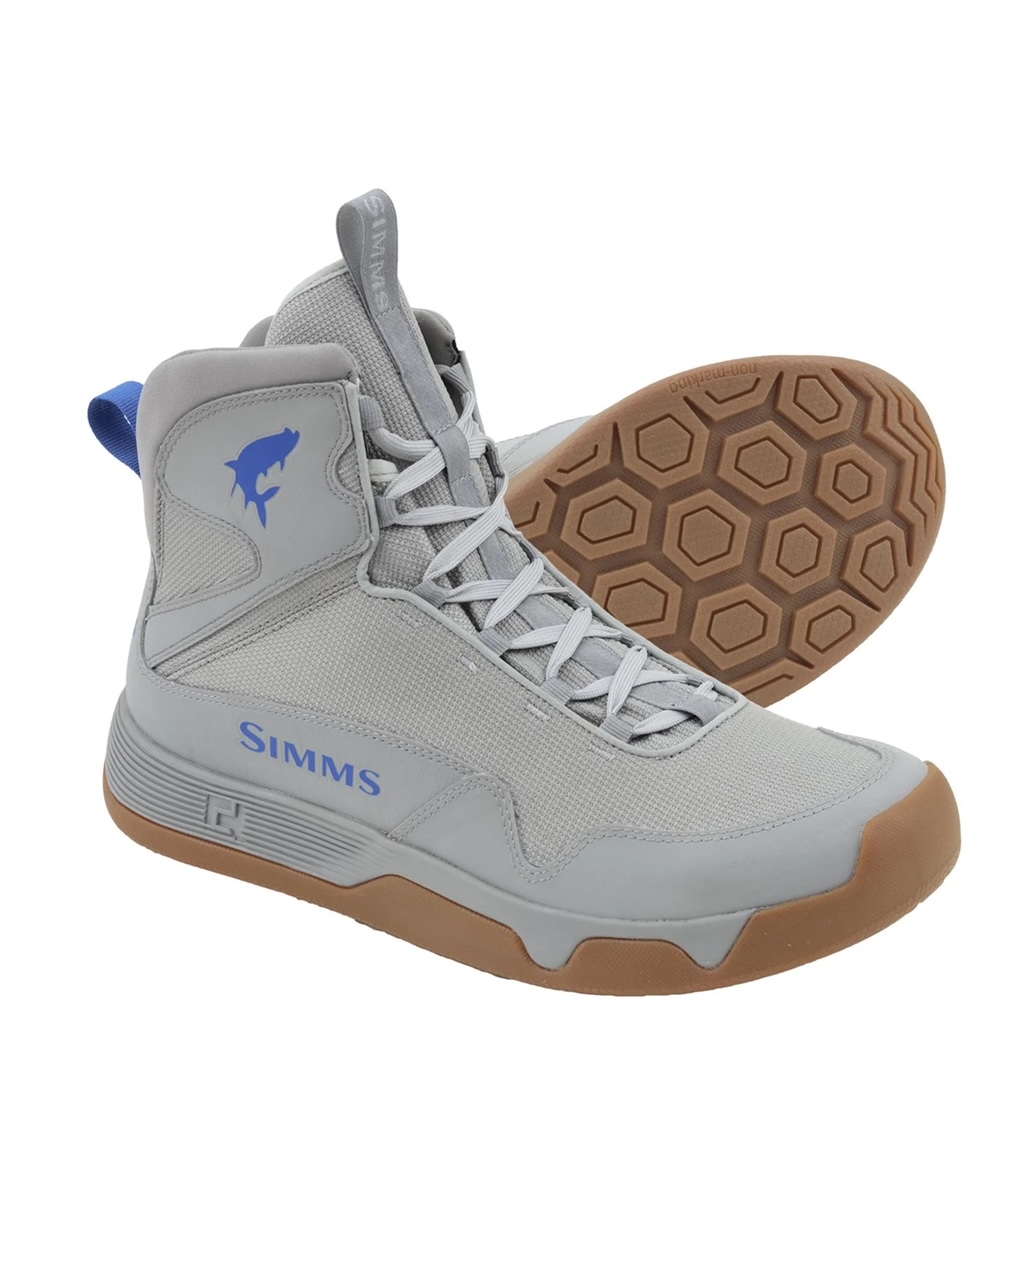 Simms Flats Sneaker Rubber (Size: 10)